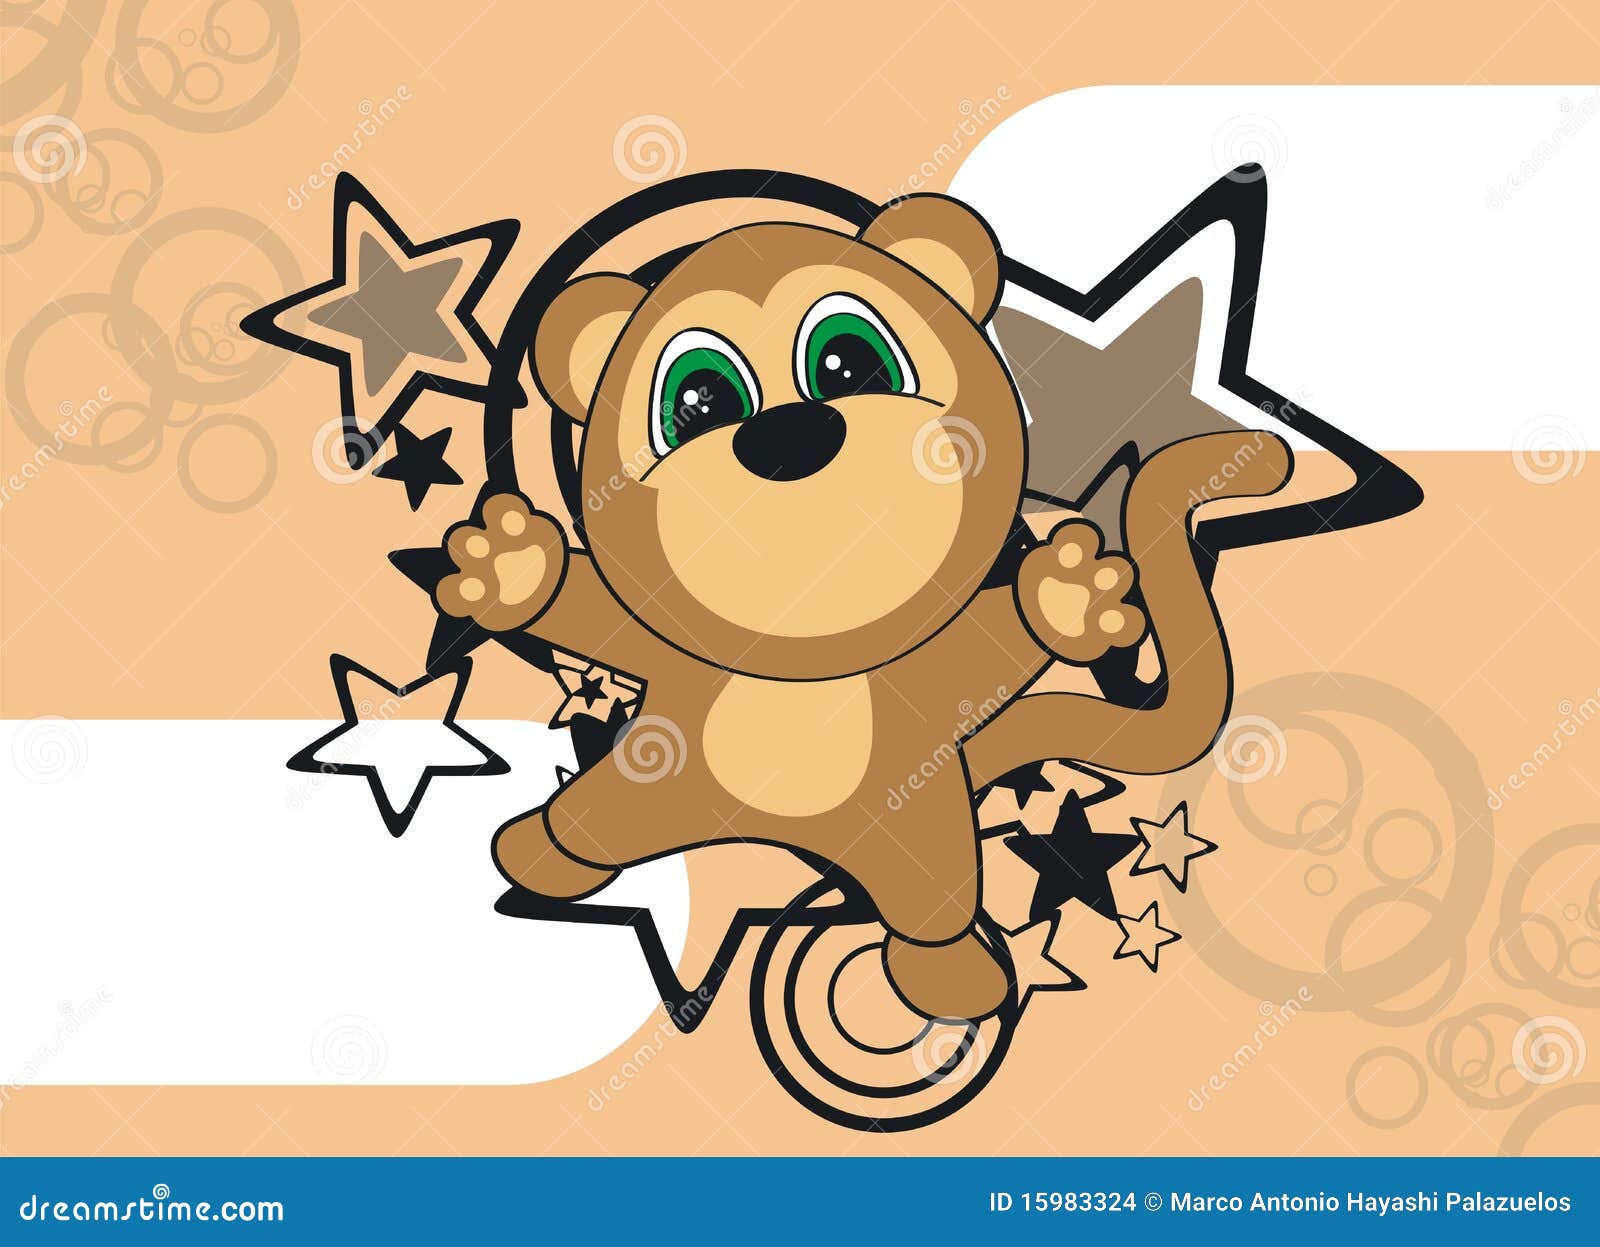 Monkey cartoon wallpaper stock illustration. Illustration of infantile -  15983324